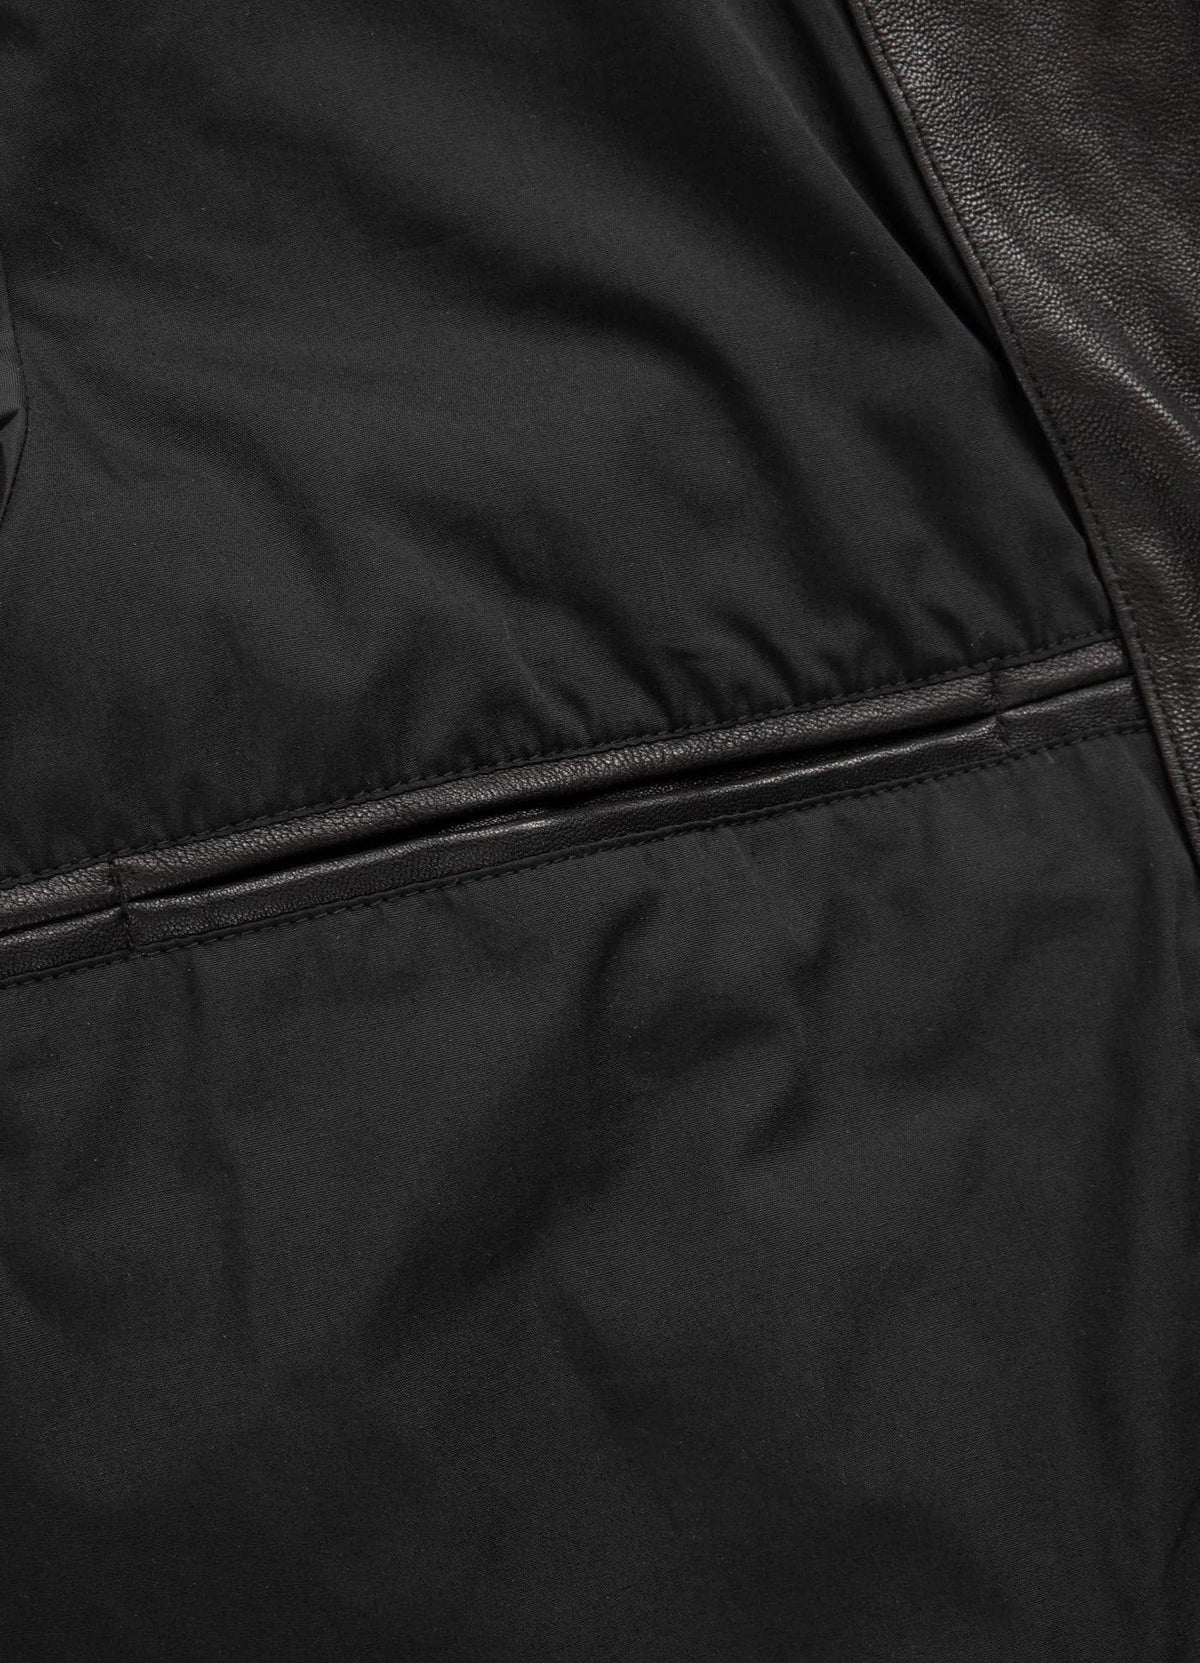 HOOPER Black Leather Jacket.